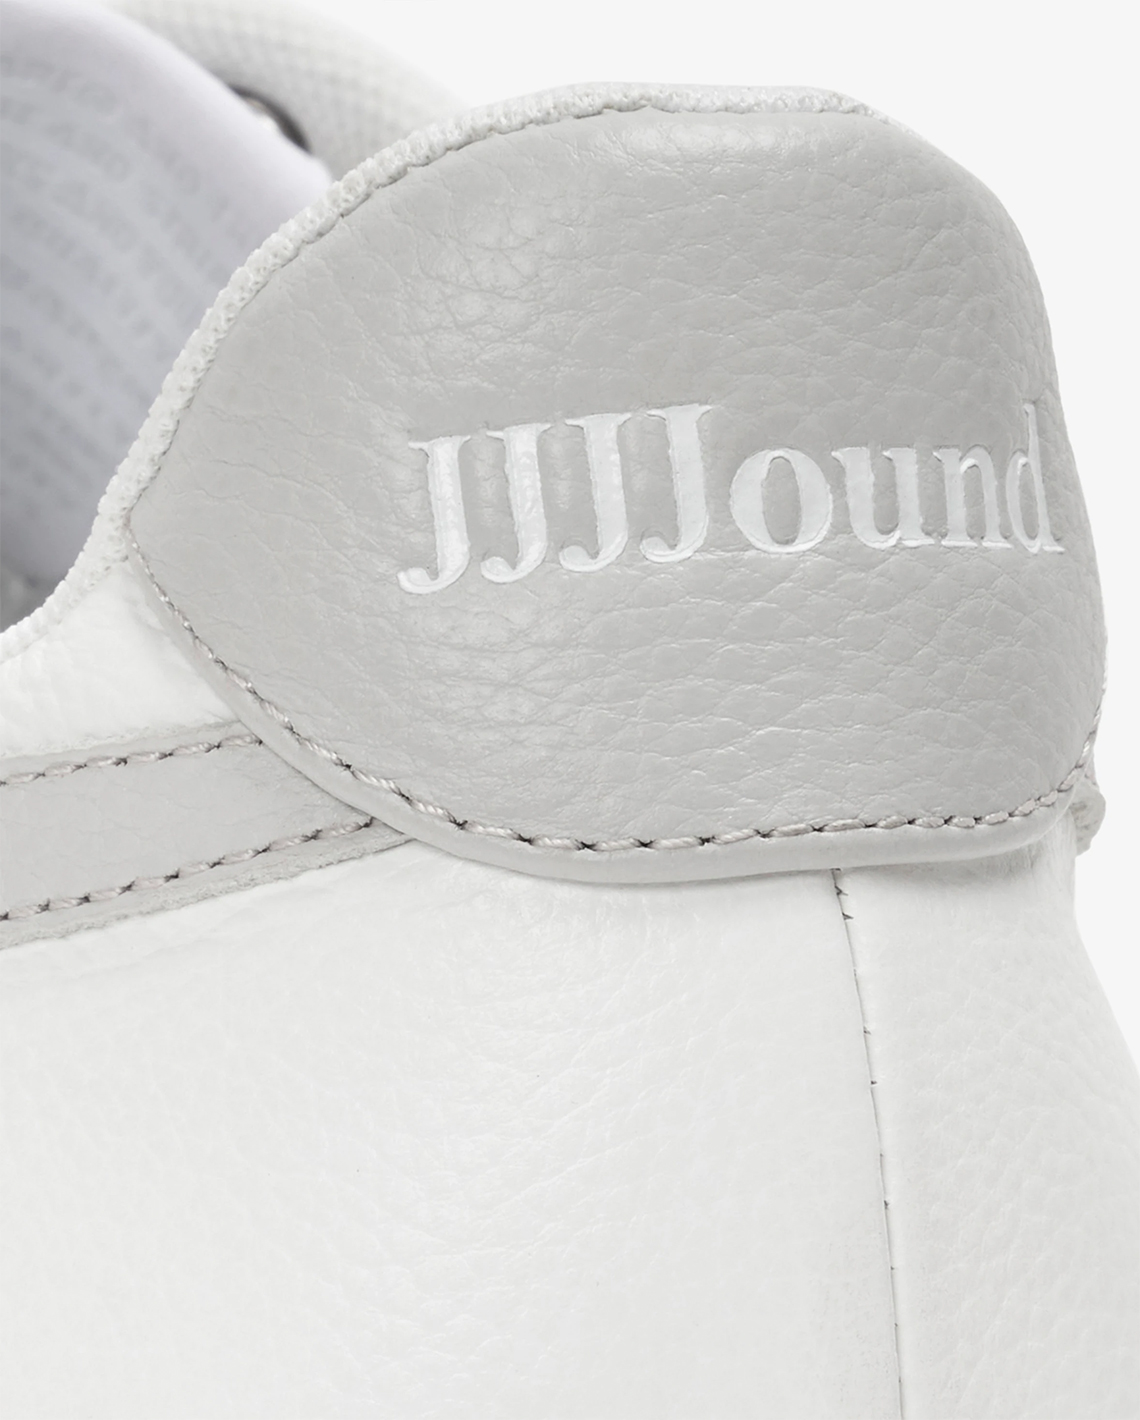 Jjjjound Nike Air Fear Of God MOC White Grey Release Date 10